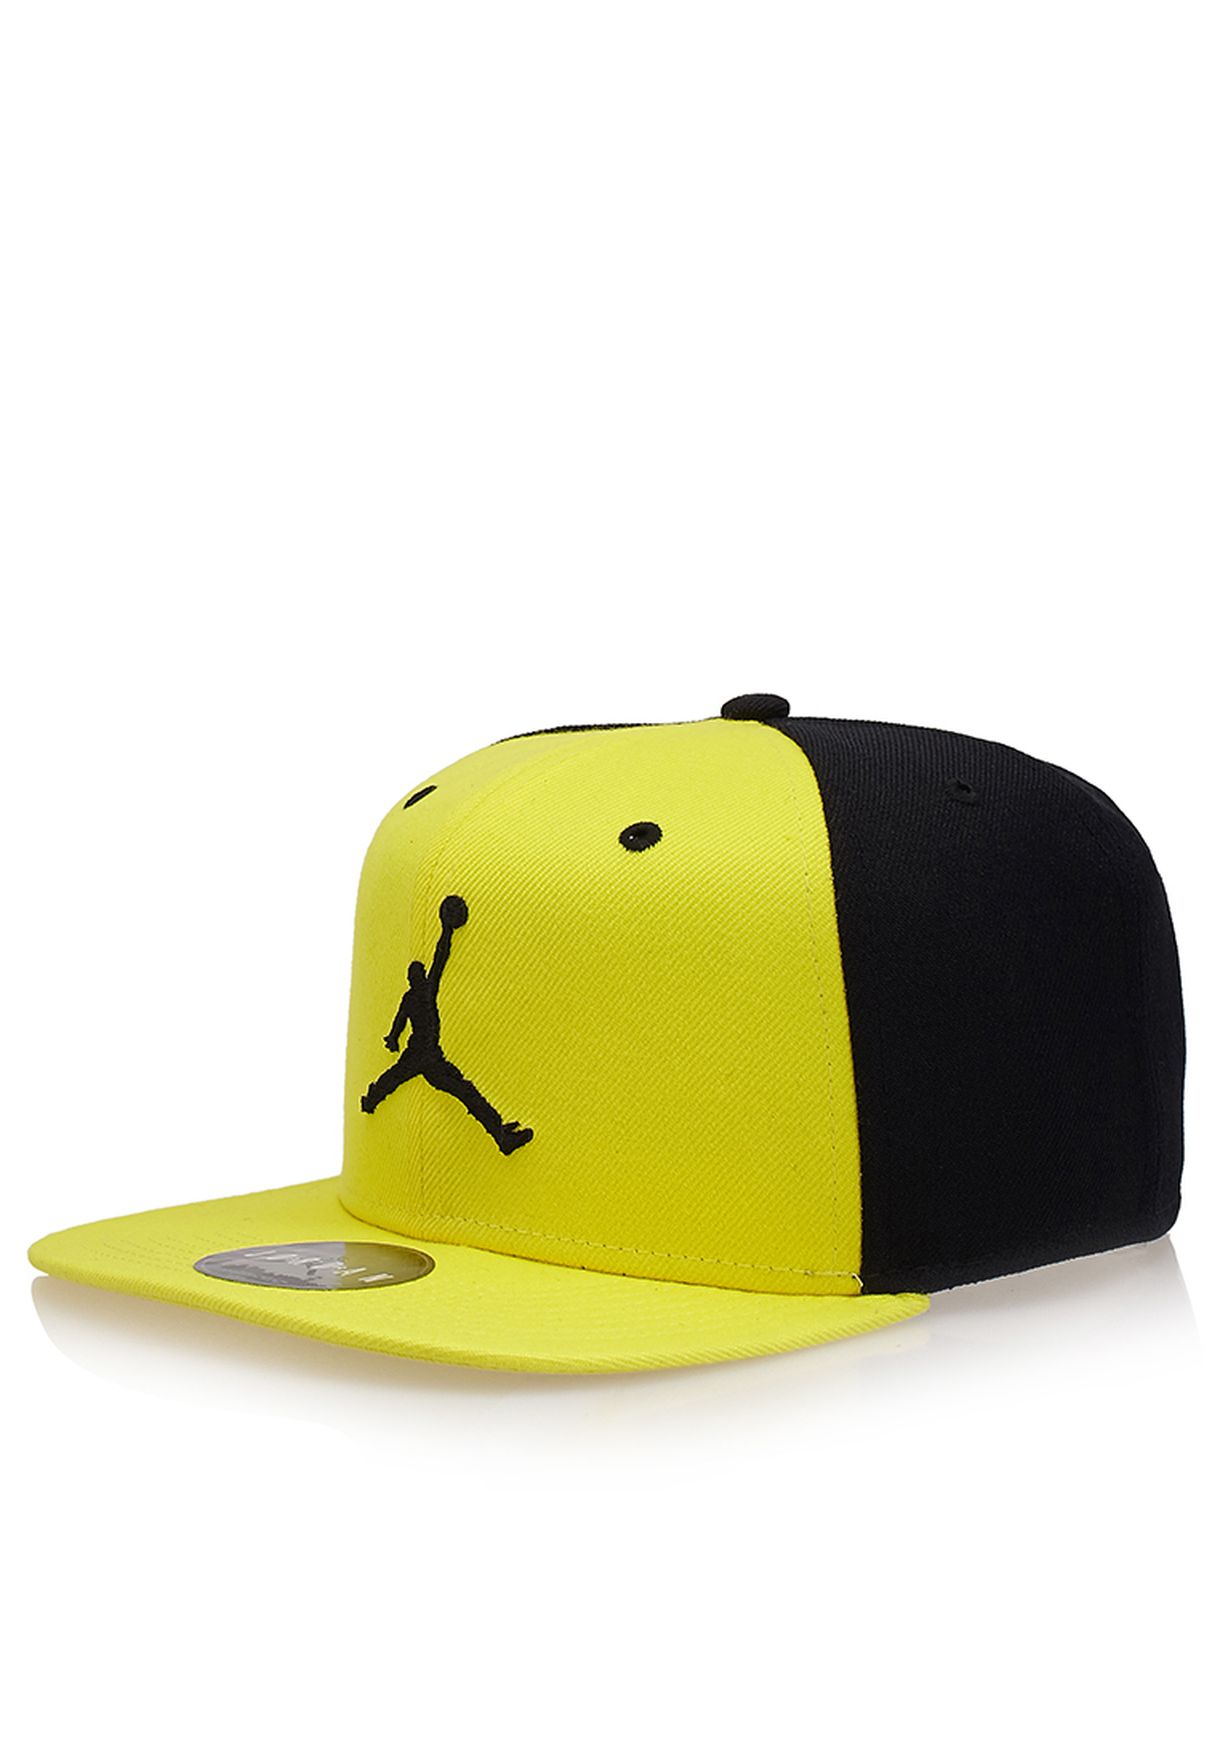 yellow jordan hat